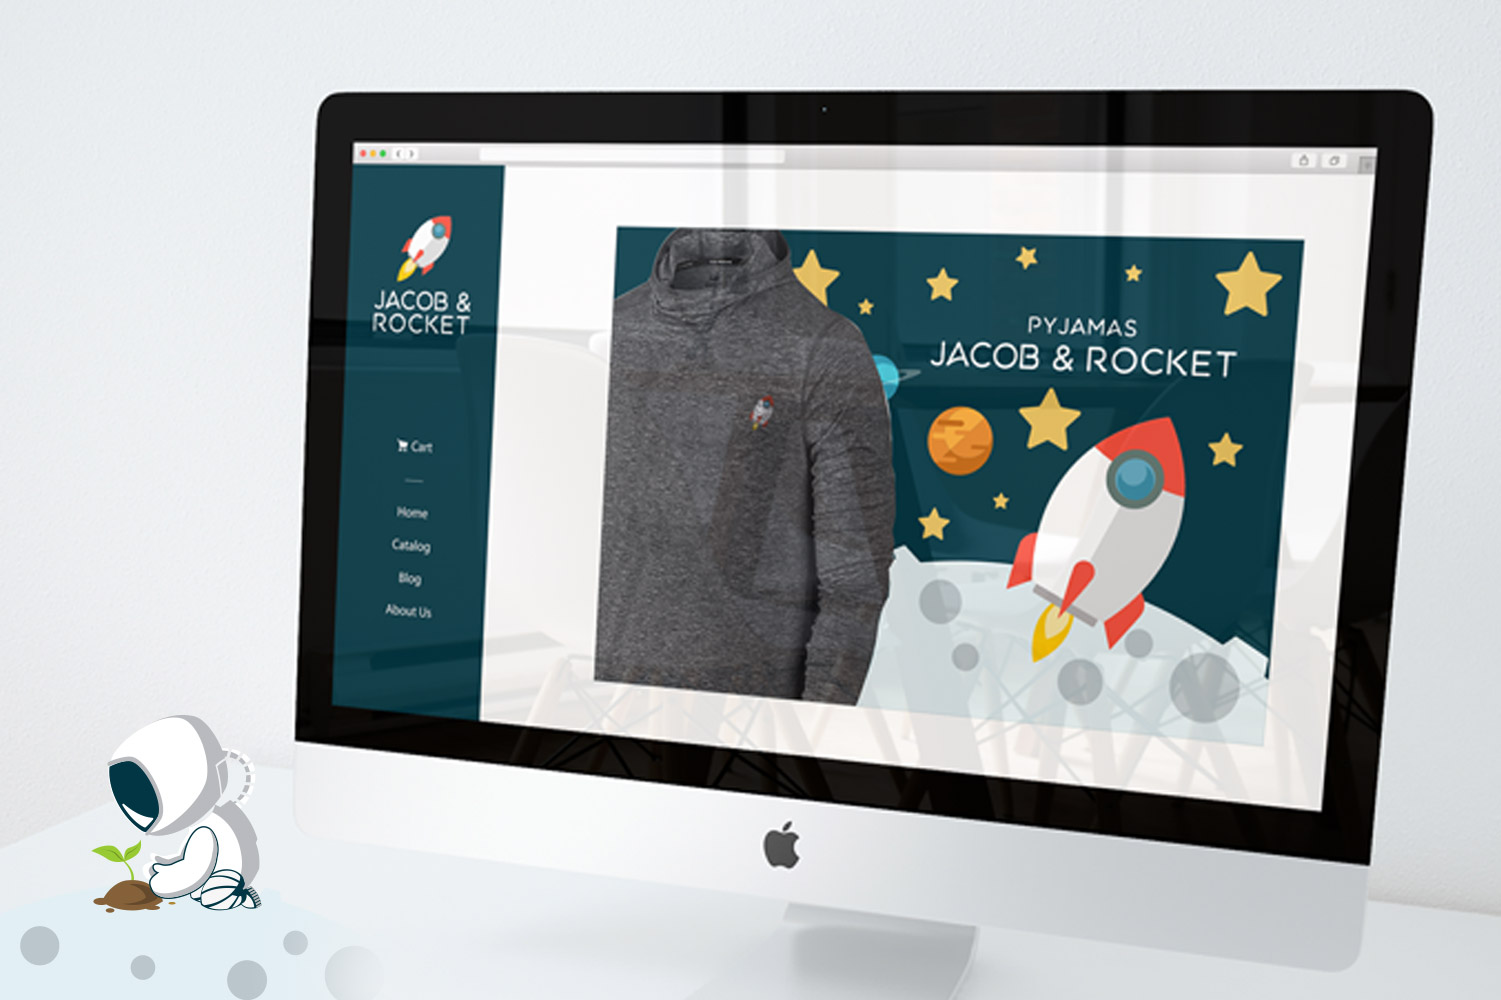 Jacob & Rocket, logo design image